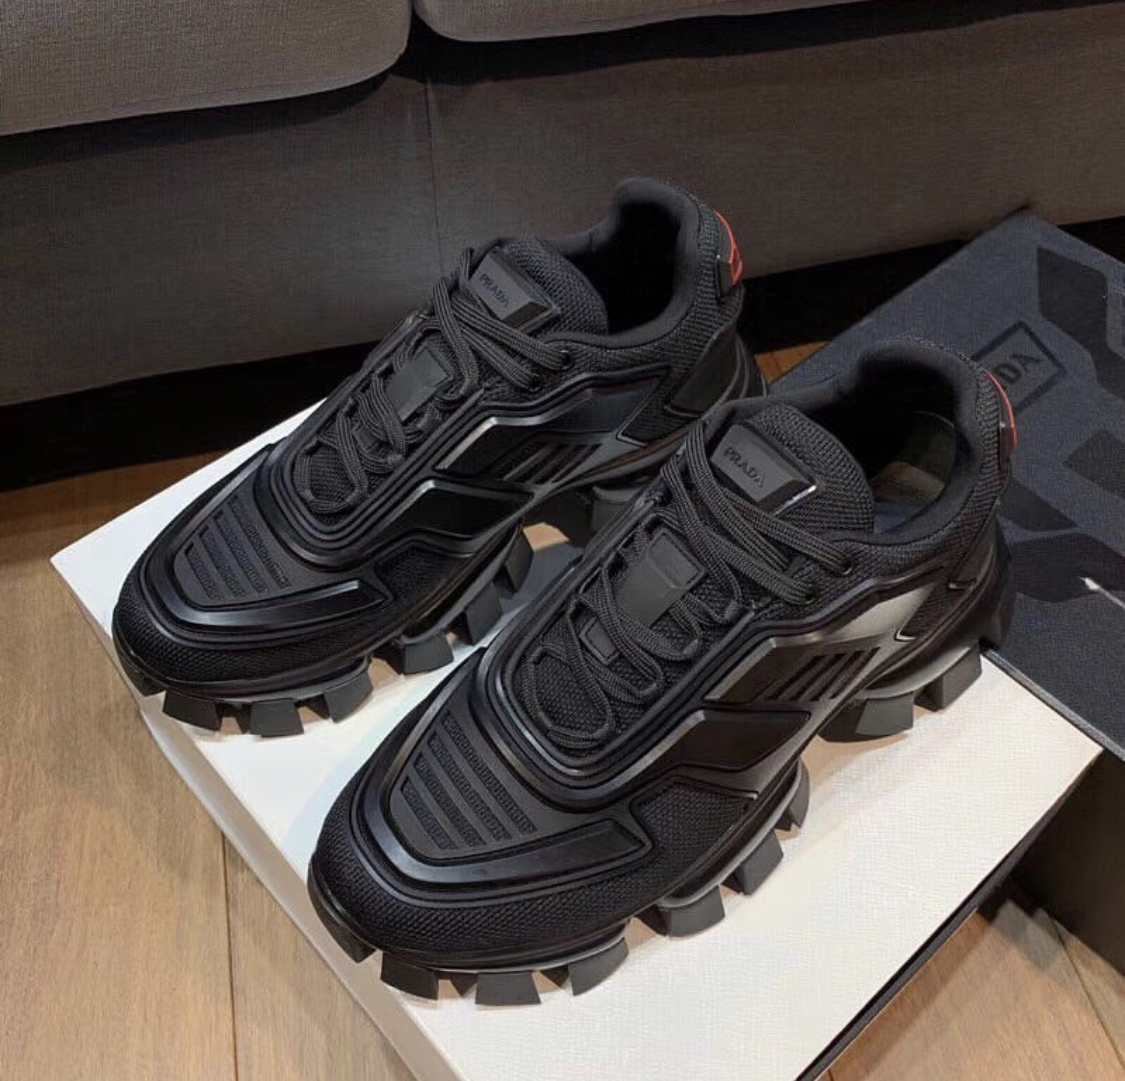 sneakers full black